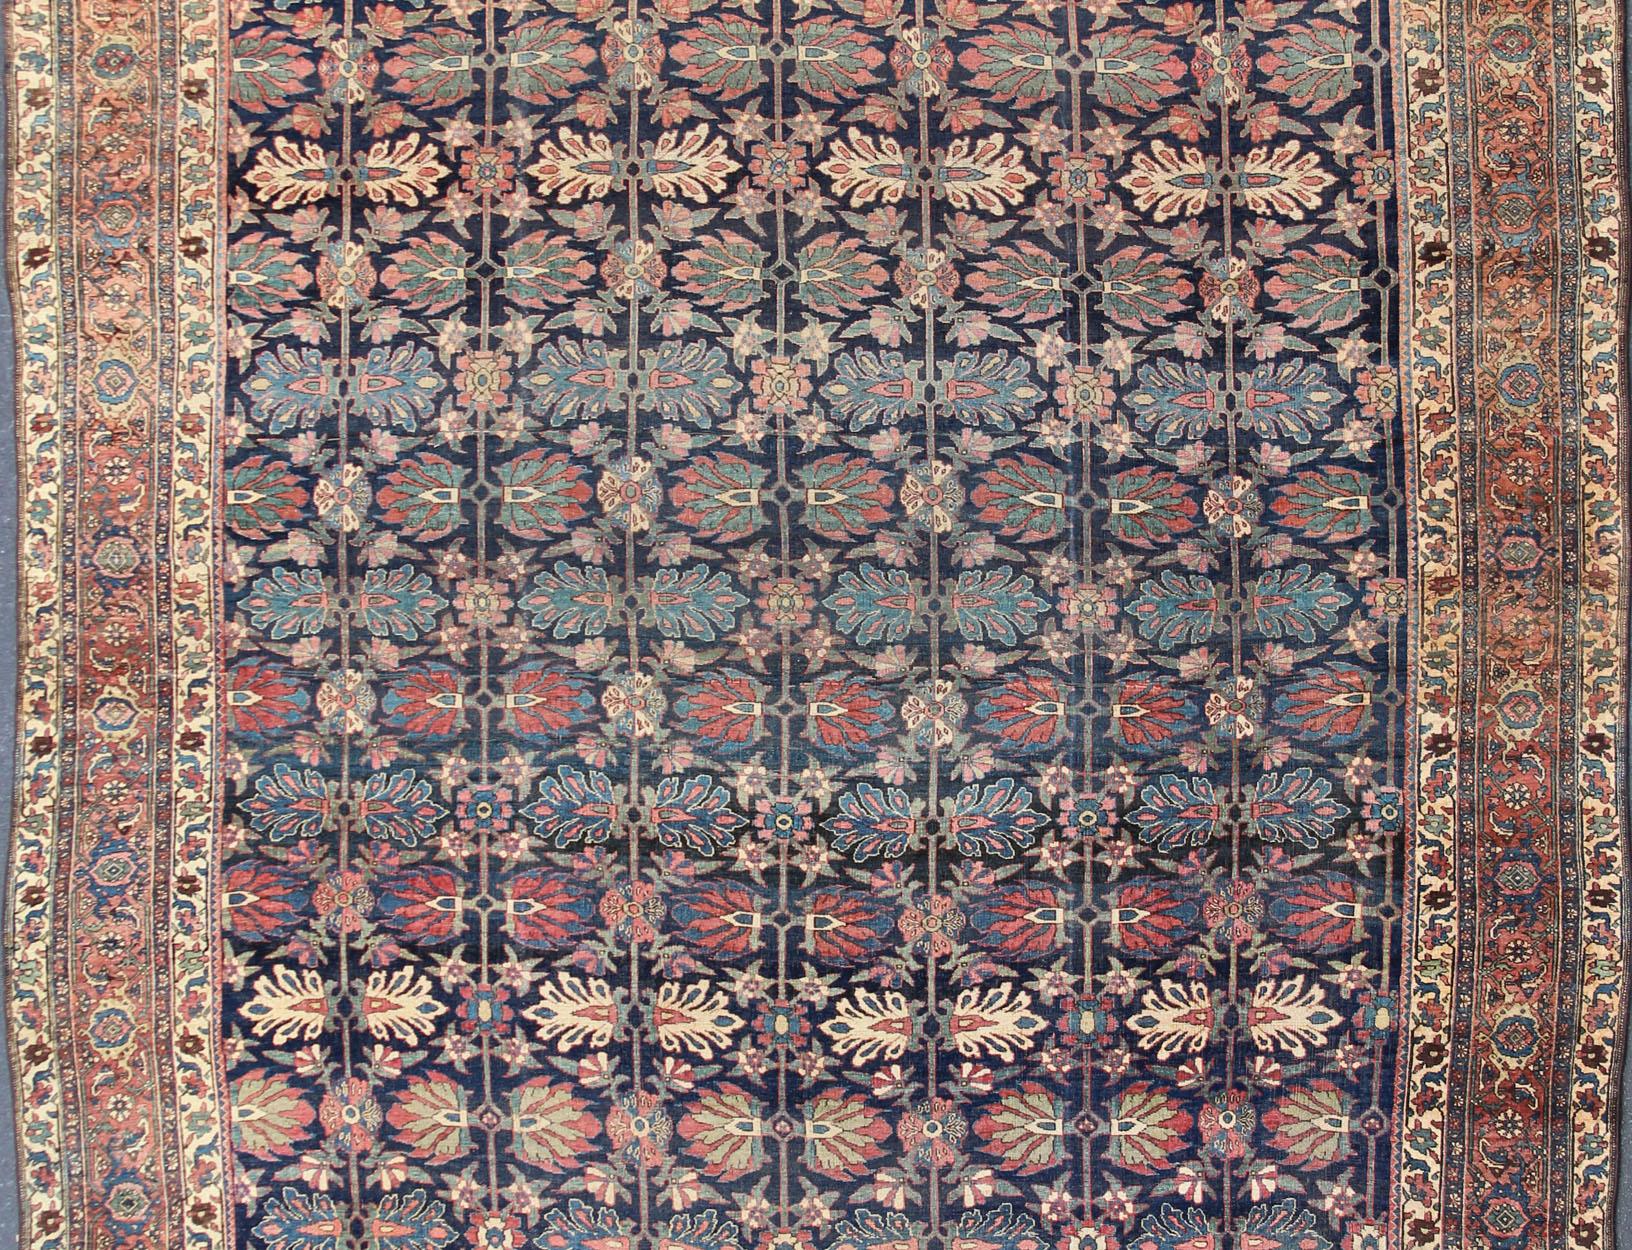 Large antique Persian bidjar rug in blue background and alternating floral pattern, Keivan Woven Arts / TRA-8051. Large antique Bidjar Late 19th Century

Distinguished primarily by their dense, durable weaves, Bidjar carpets are fantastic